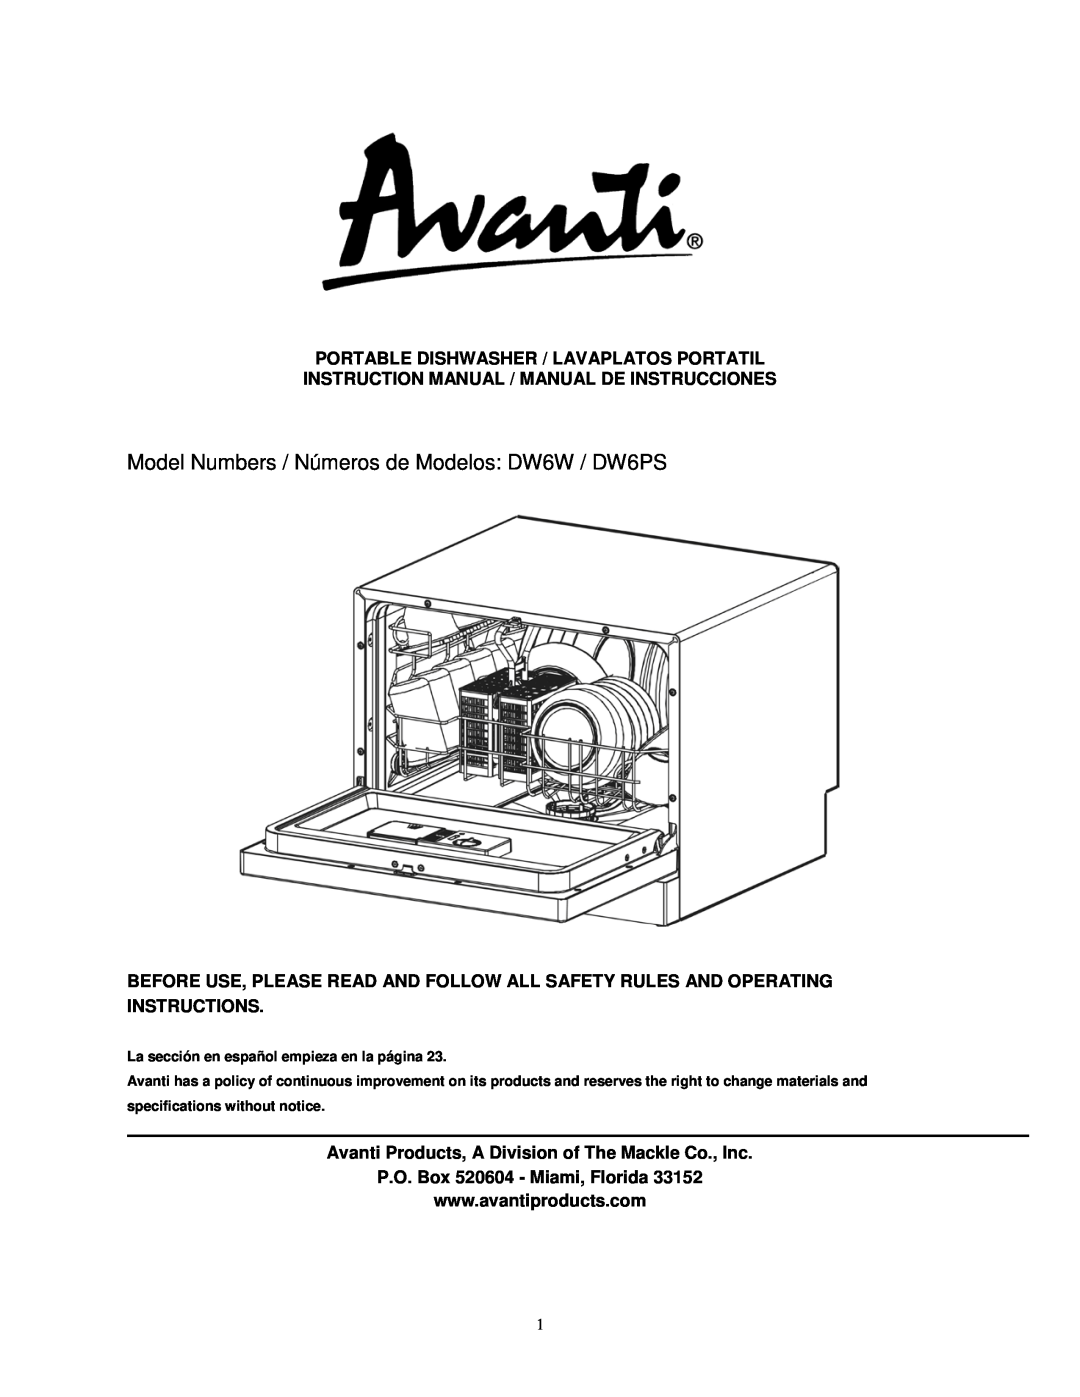 Avanti instruction manual Model Numbers / Números de Modelos DW6W / DW6PS, Portable Dishwasher / Lavaplatos Portatil 